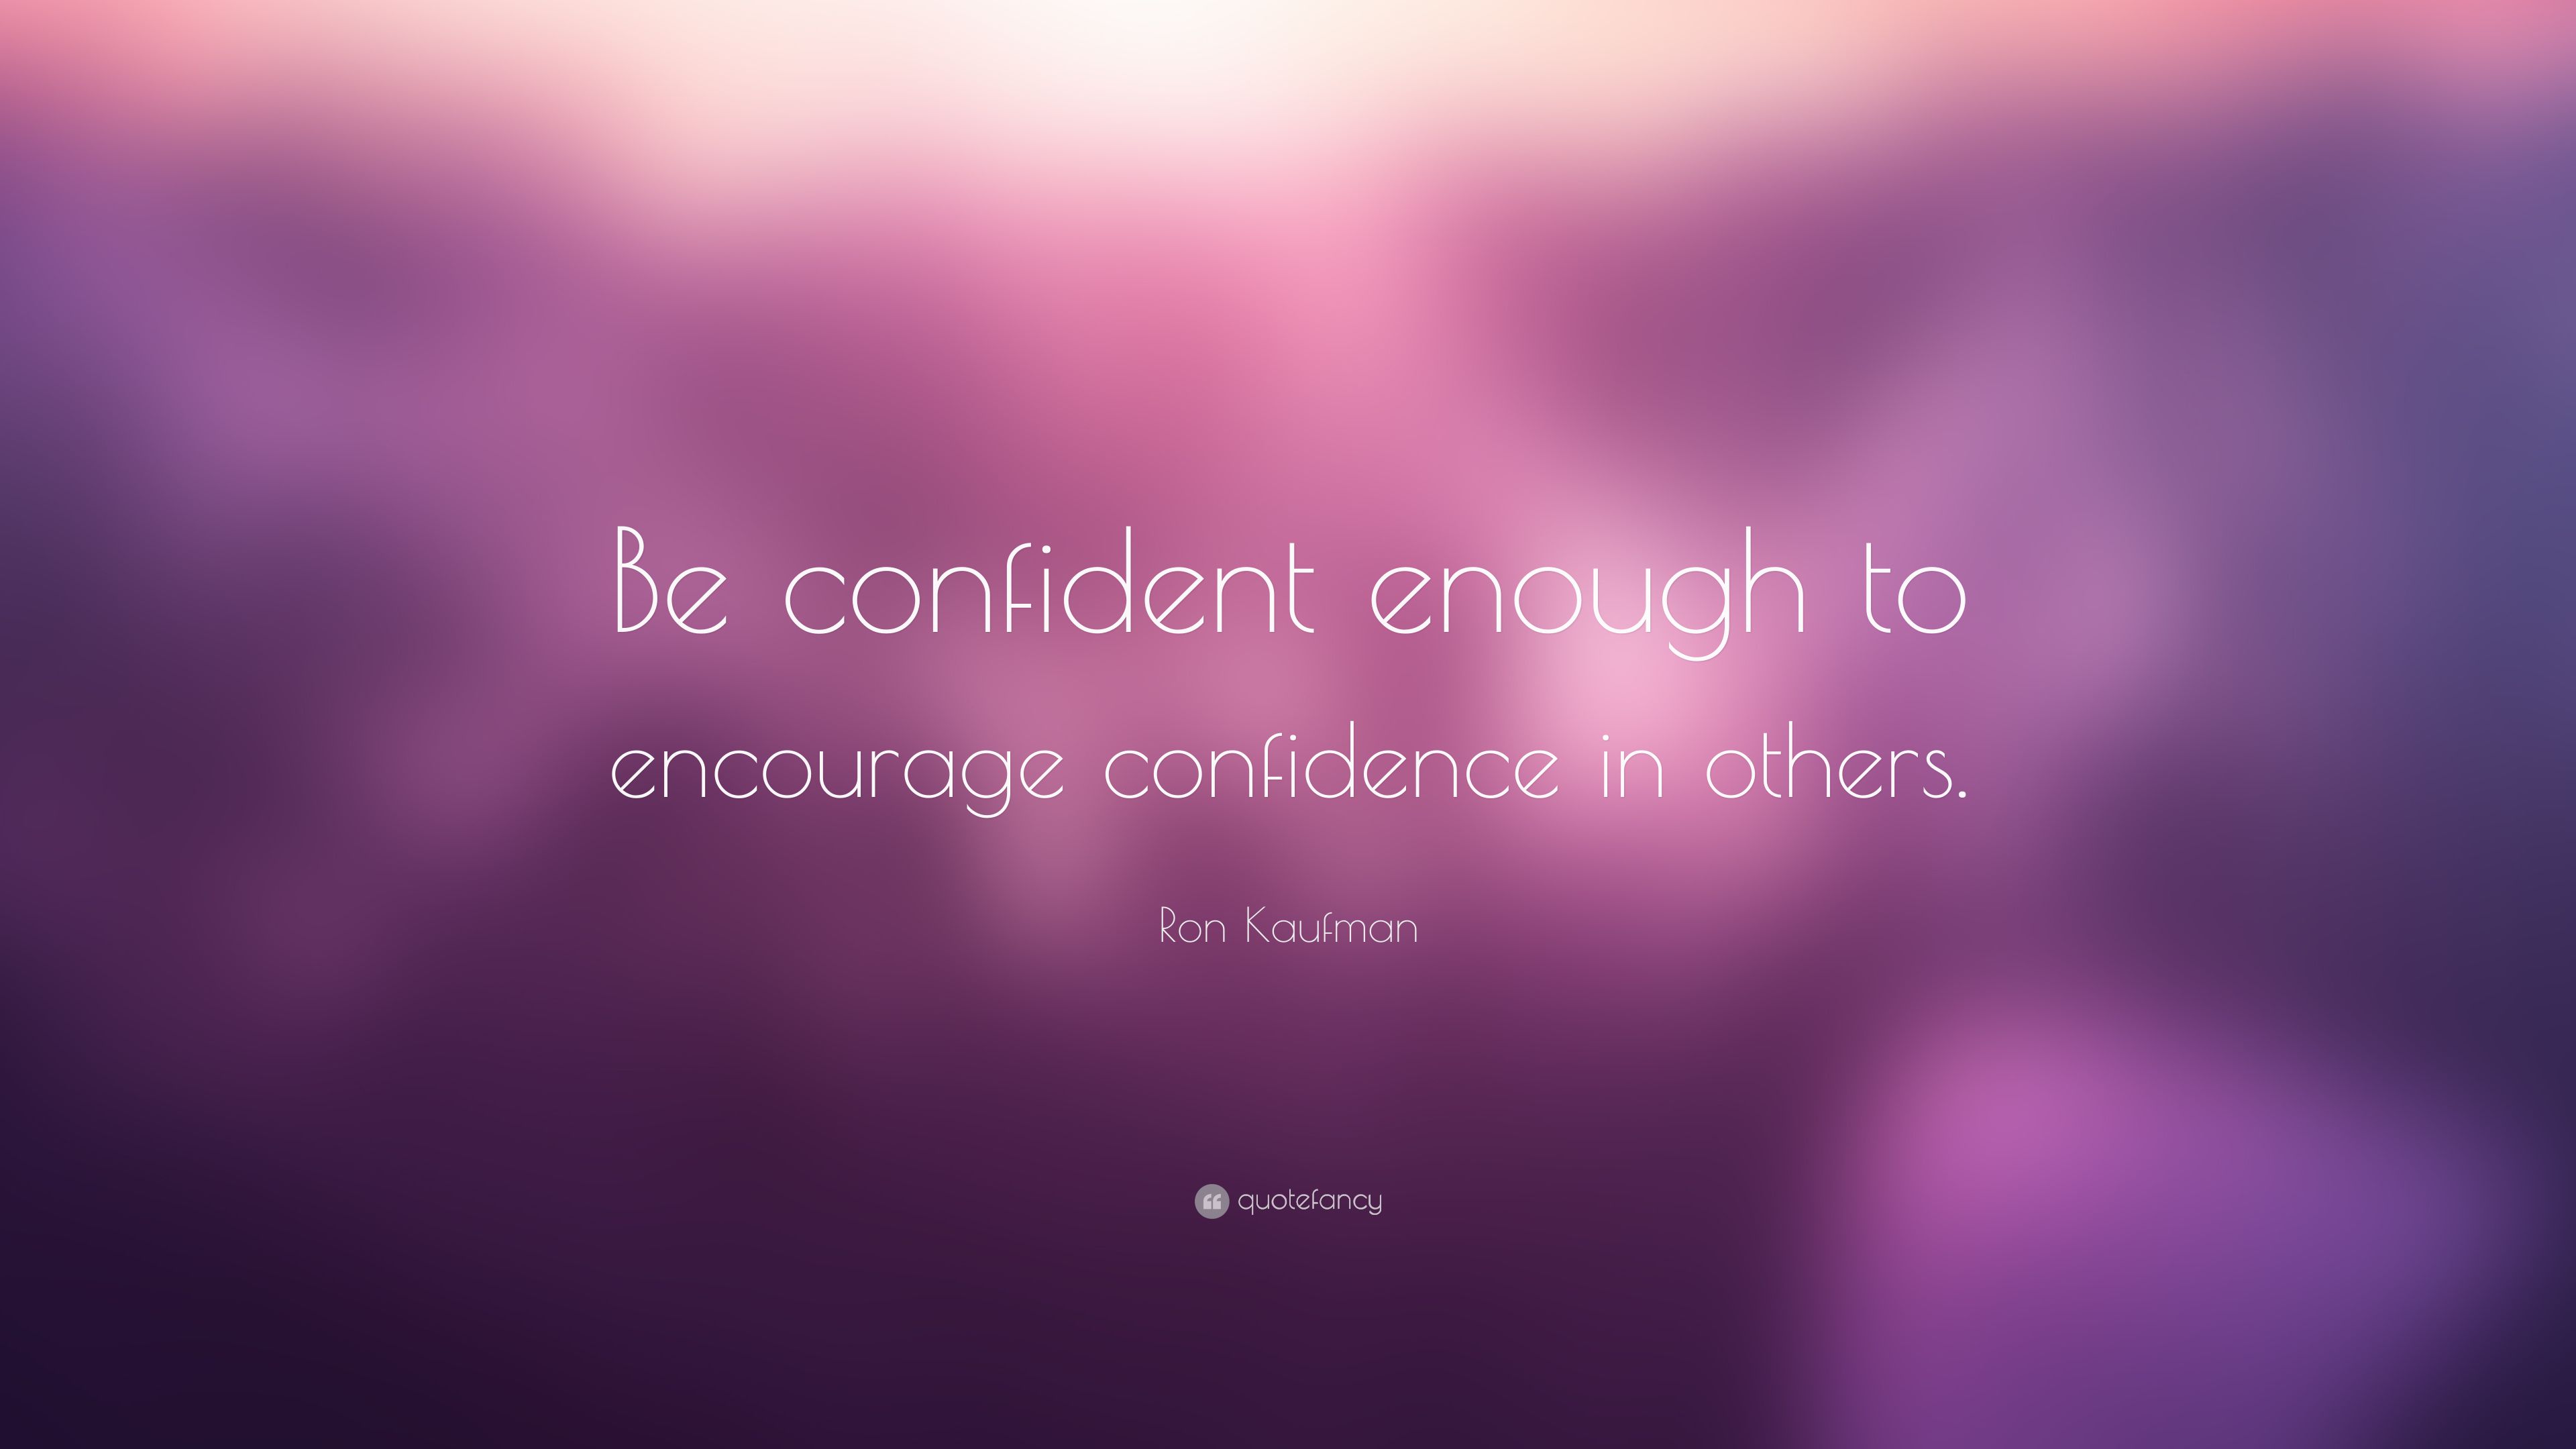 Ron Kaufman Quote: “Be confident enough to encourage confidence